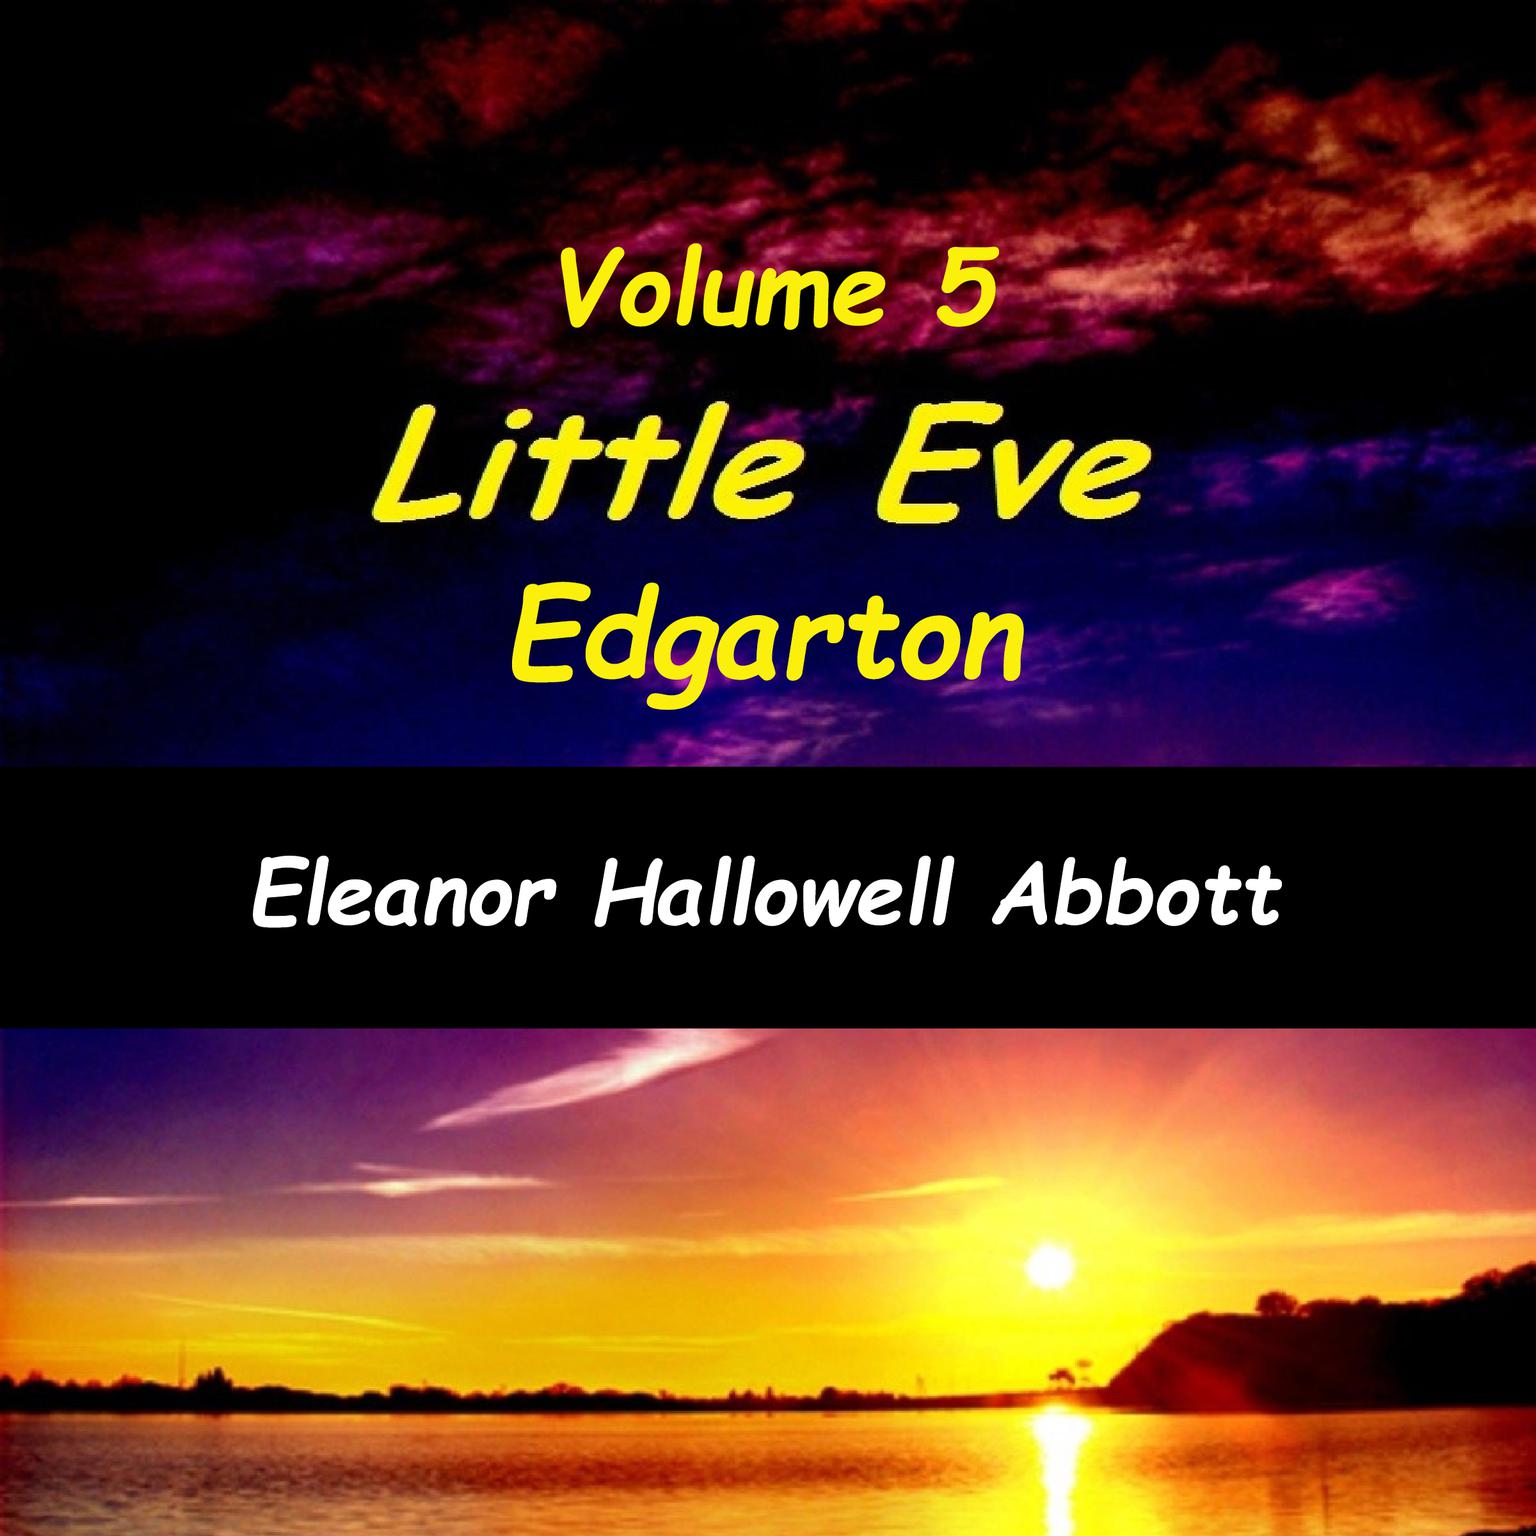 Little Eve Edgarton Volume 5 (Abridged) Audiobook, by Eleanor Hallowell Abbott